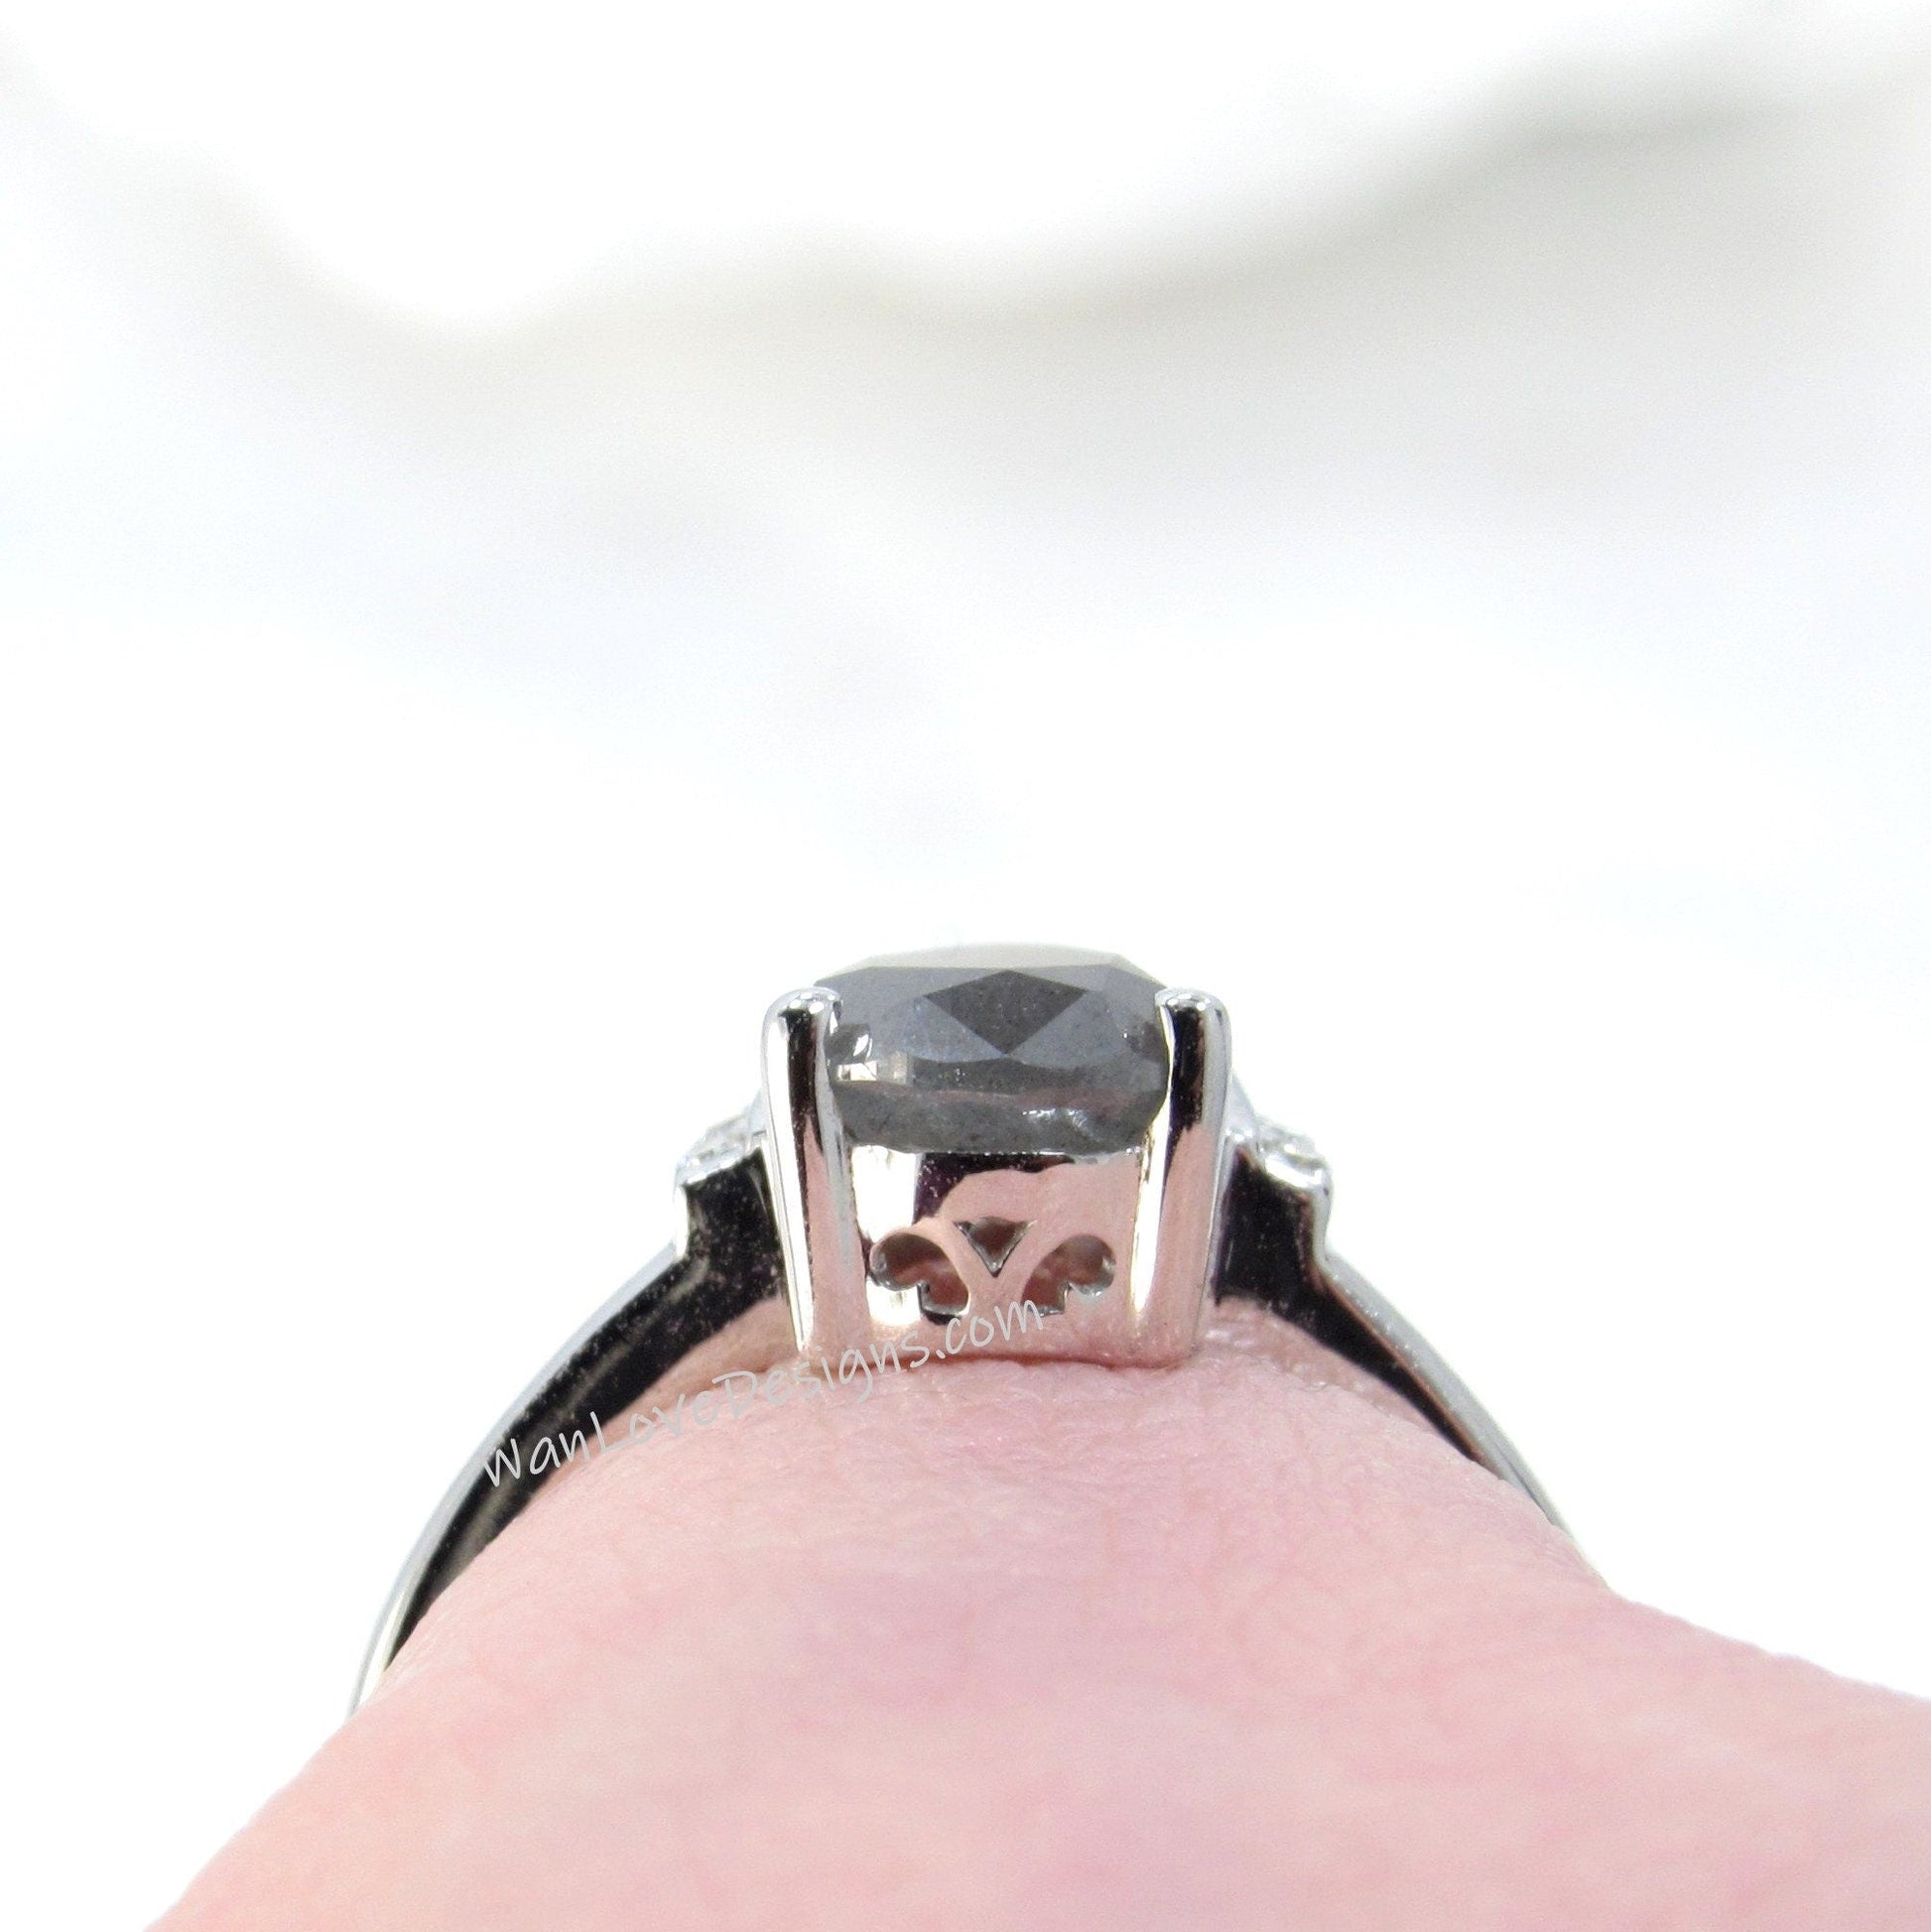 Salt & Pepper Diamond Pear Modern Semi Bezel Crescent Half Halo Unique Engagement Ring halo prong bezel ring Salt and Pepper diamond ring Wan Love Designs